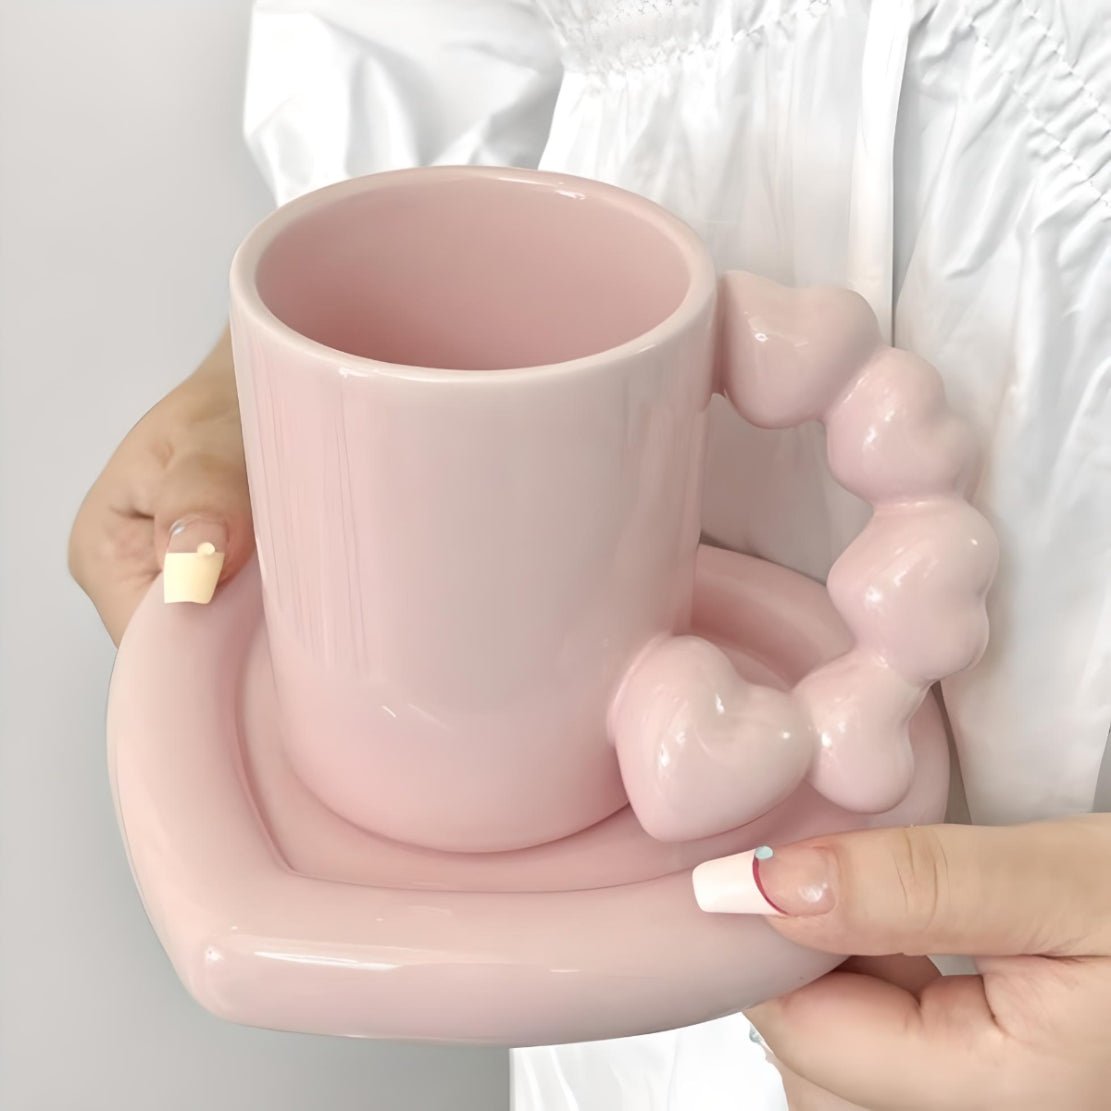 Pink, ceramic mug with heart handle and saucer